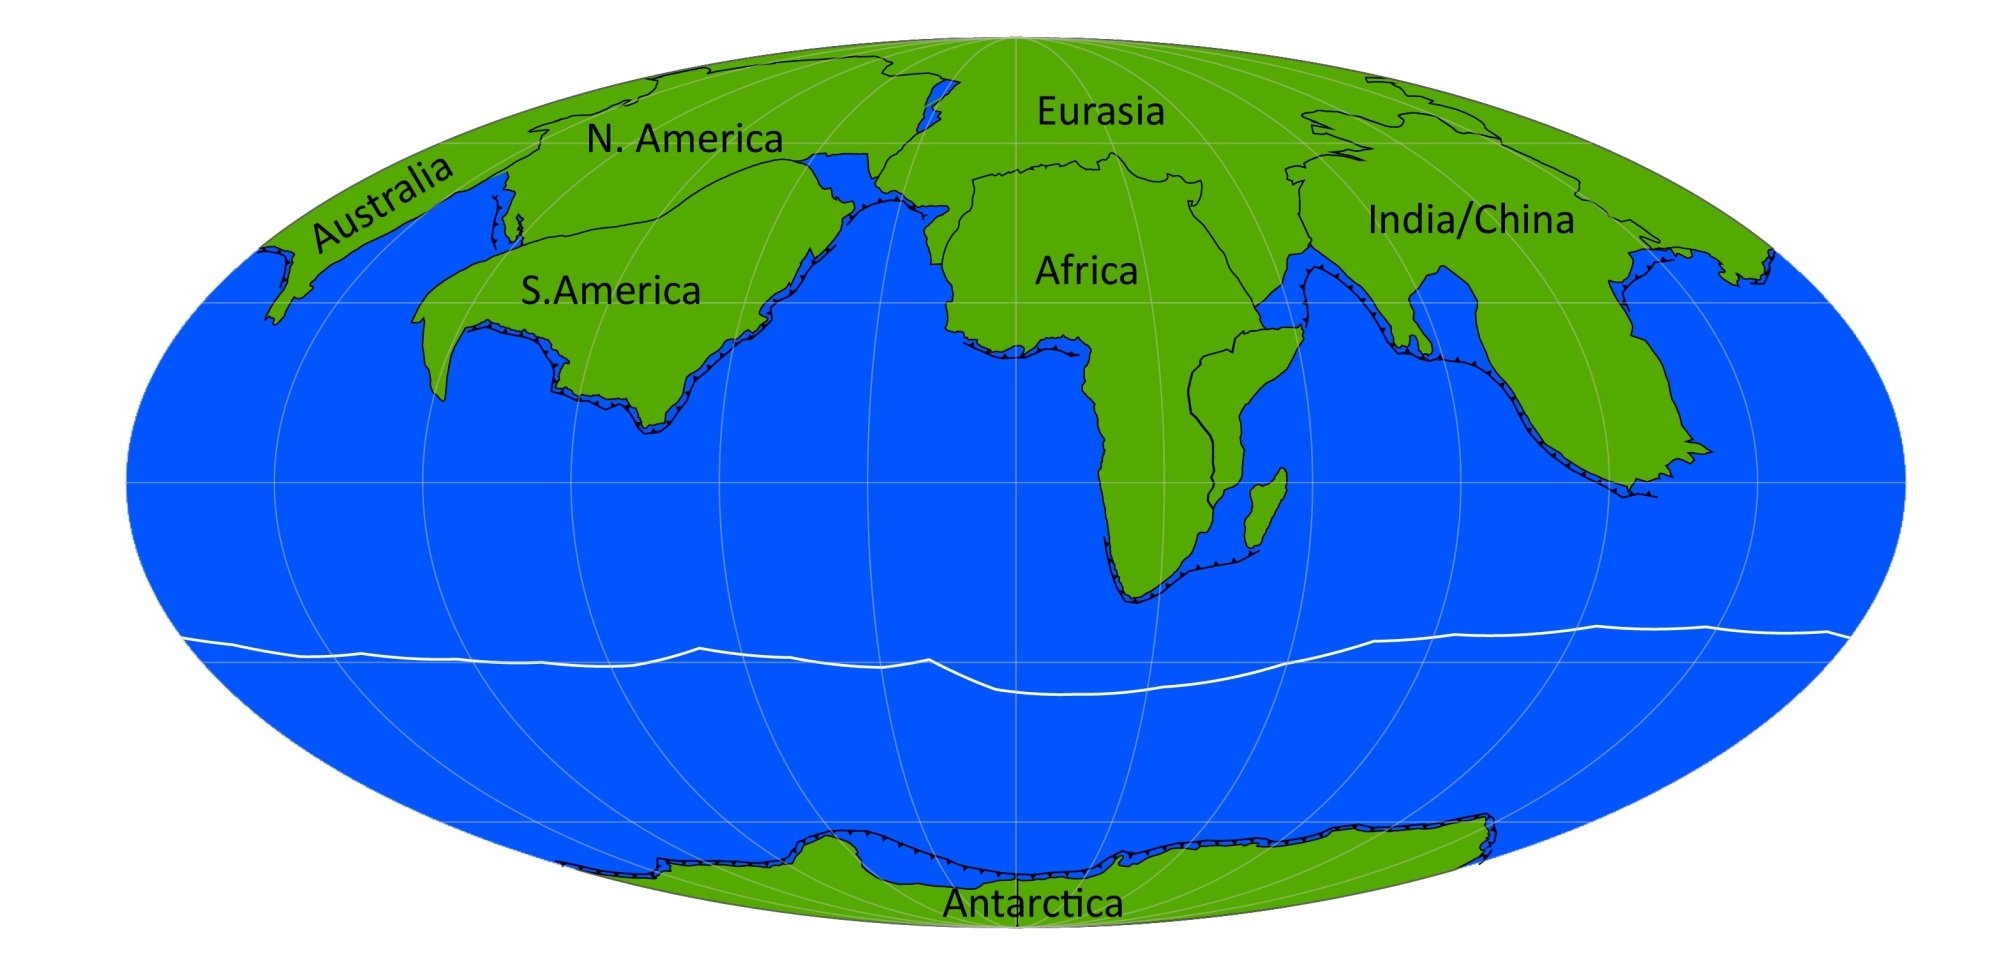 Le futur supercontinent potentiel « Amasia ».